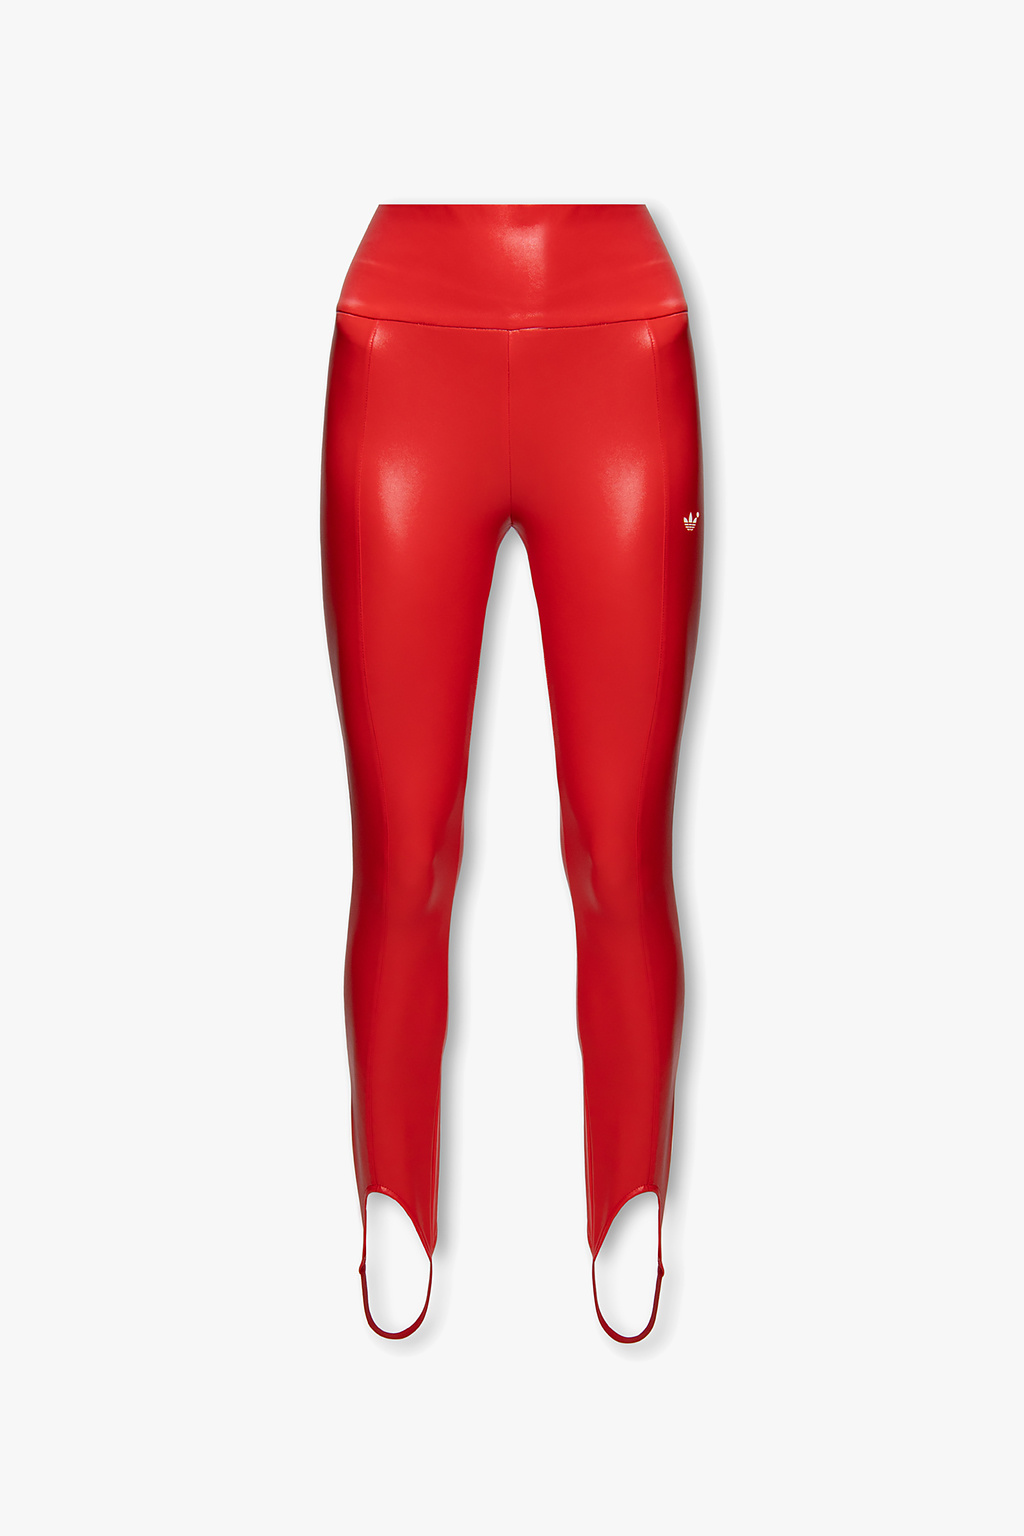 adidas Original leggings in red